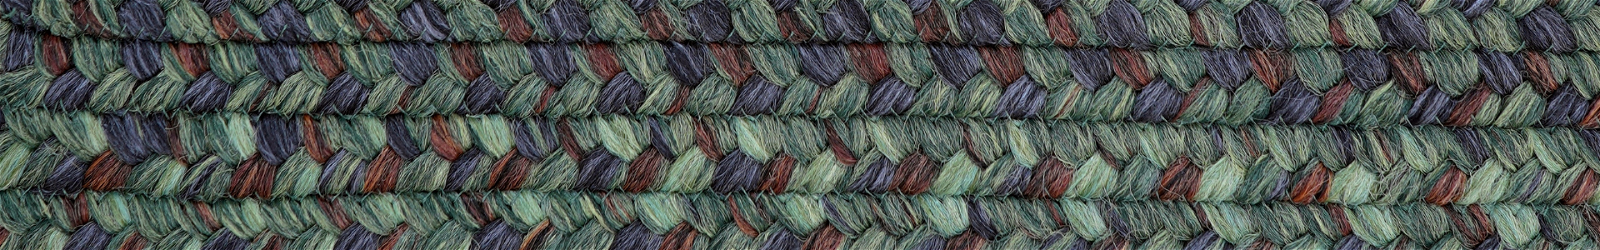 10 x 10 - Jute - Green Braided Rugs